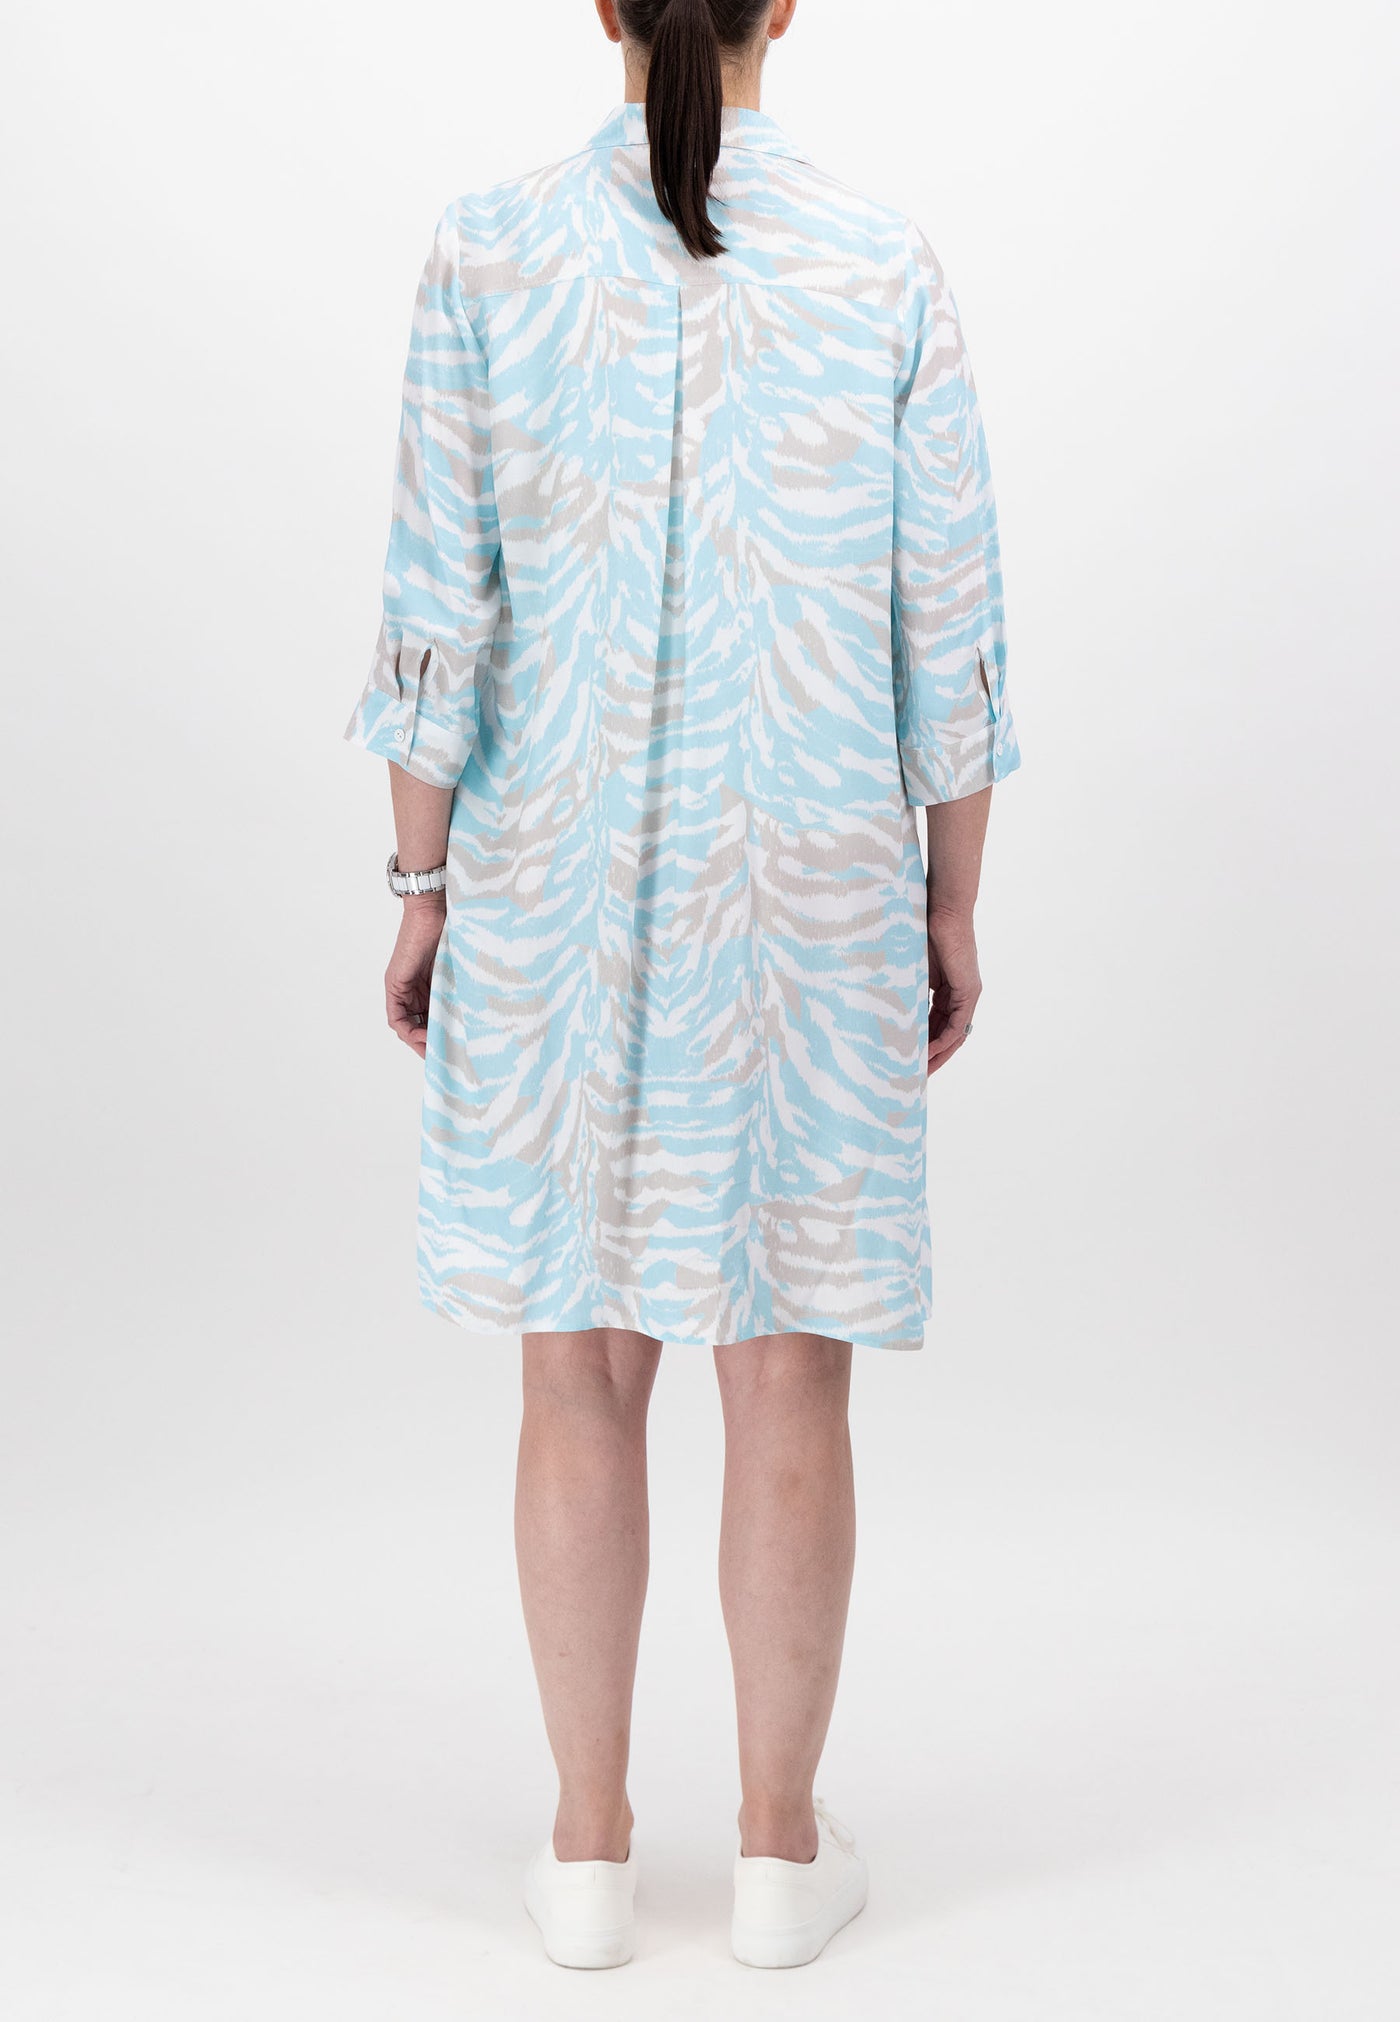 Blue & Brown Zebra Print Shirt Dress With Collar & 3/4 Sleeves